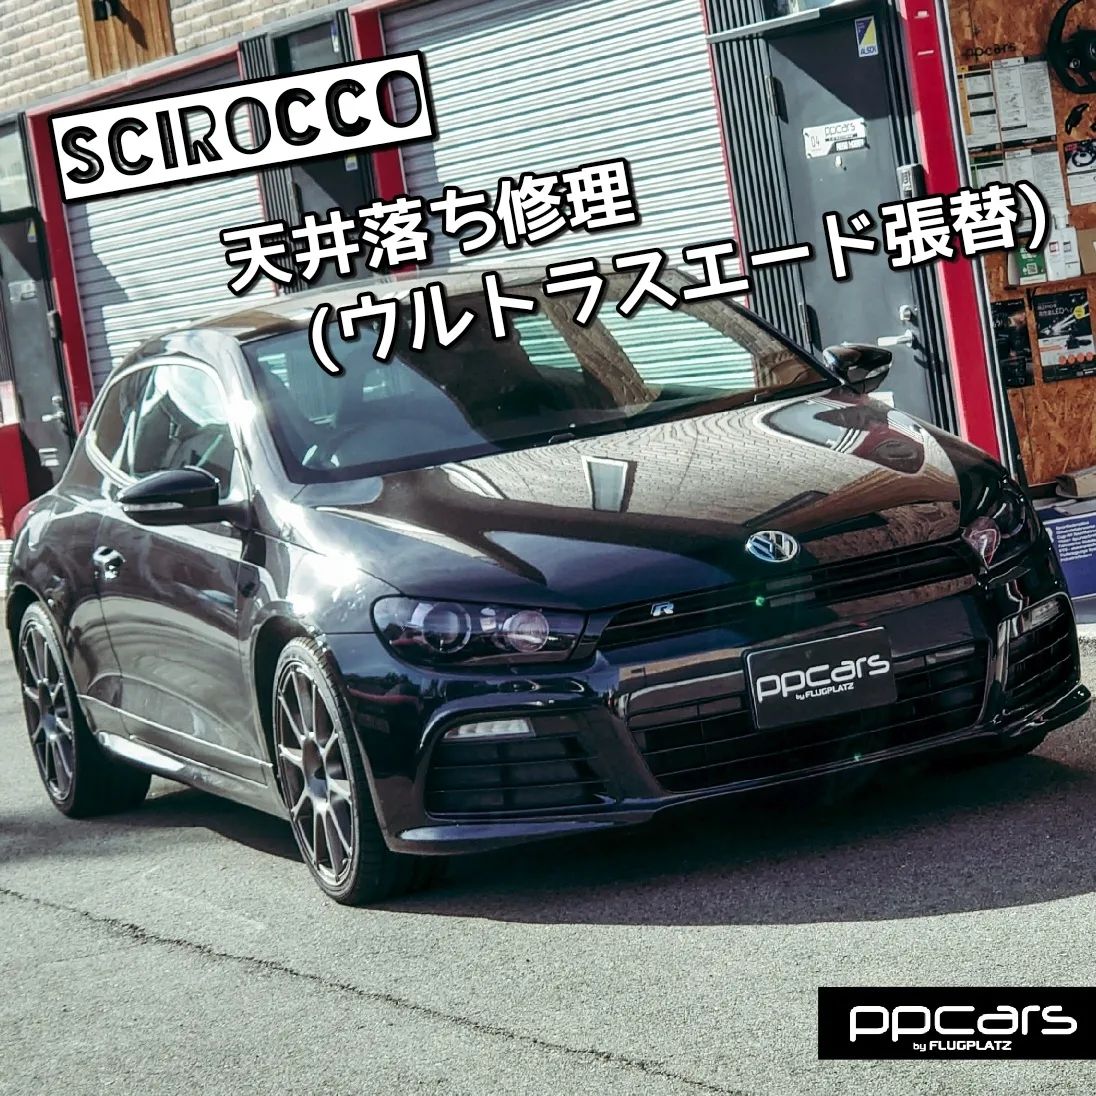 Scirocco R (137) RECARO x 天張り(天井落ち)補修